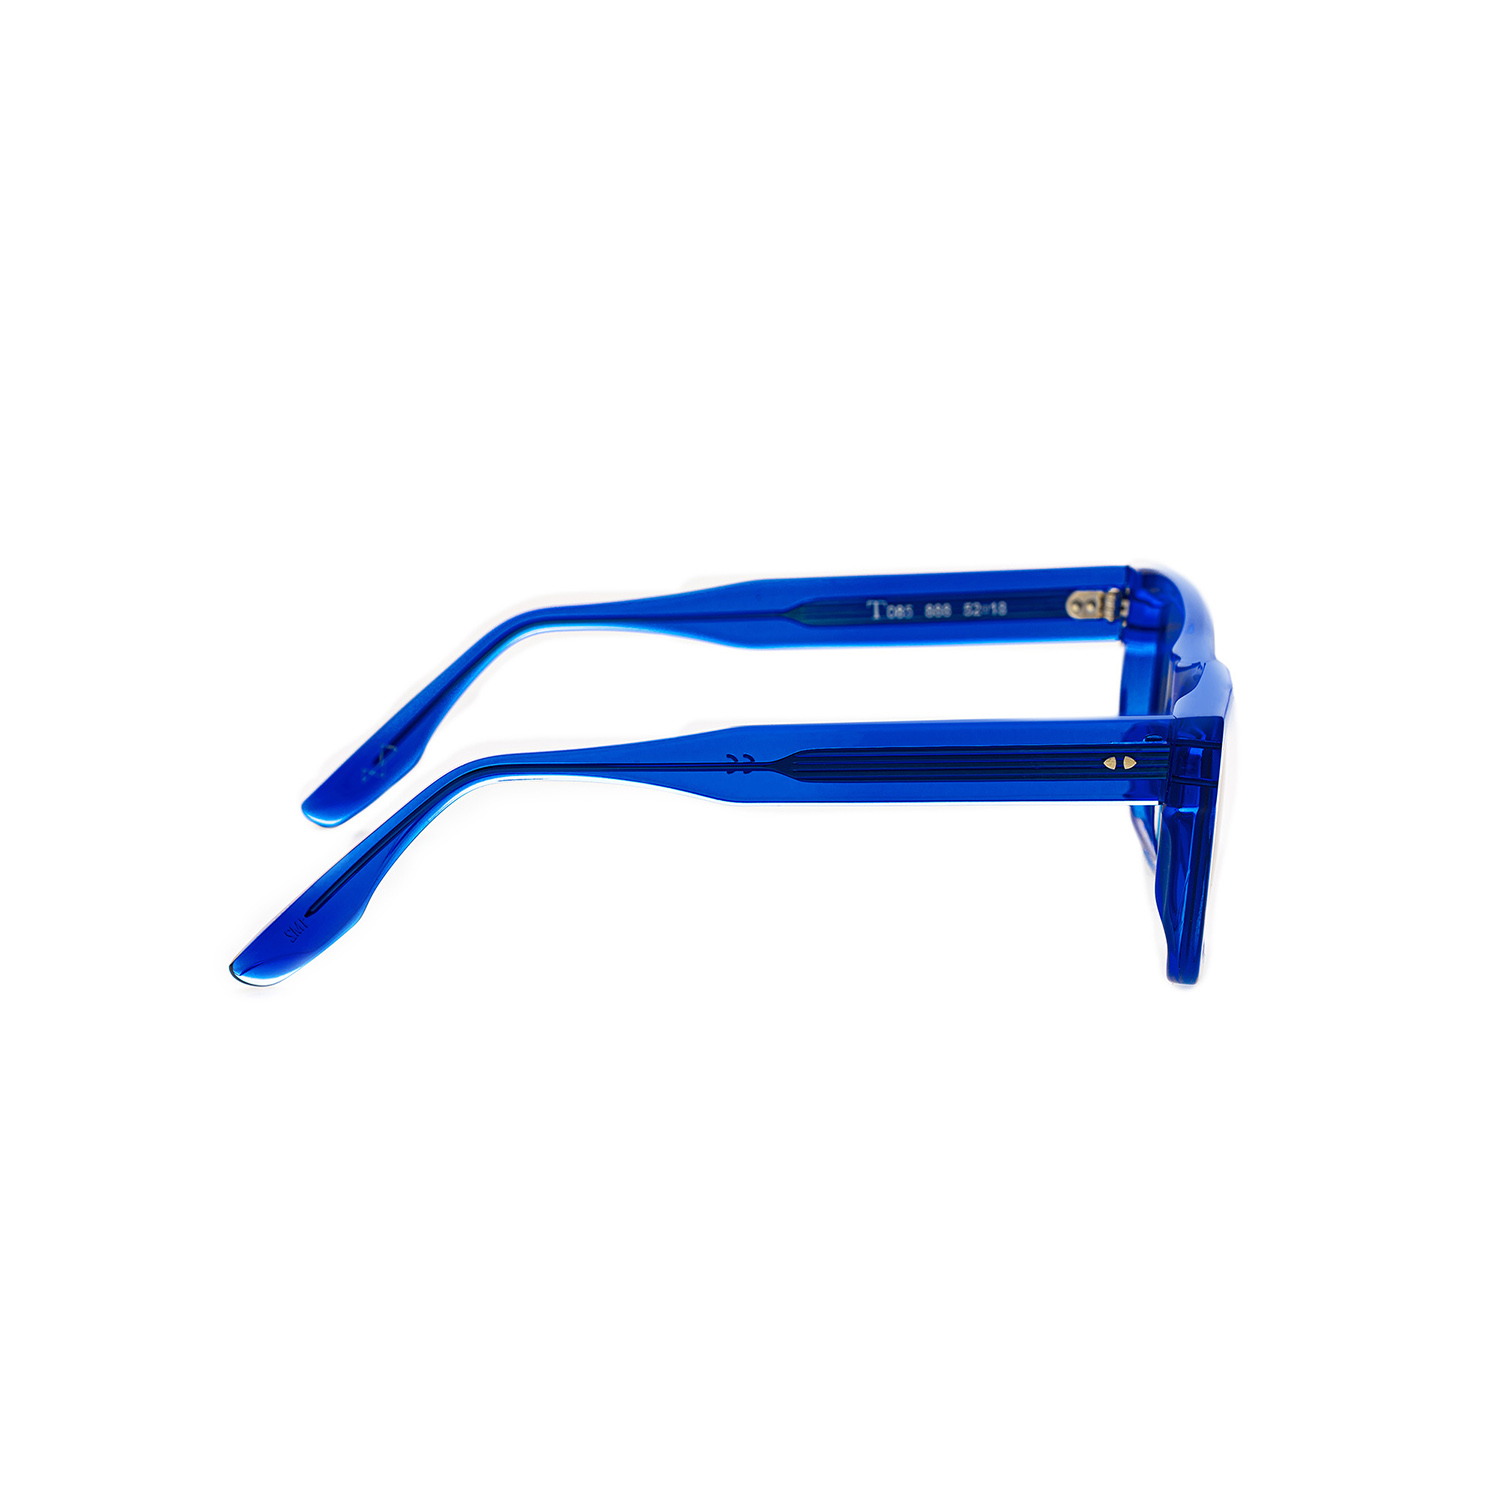 Costantino Toffoli Glasses model T085